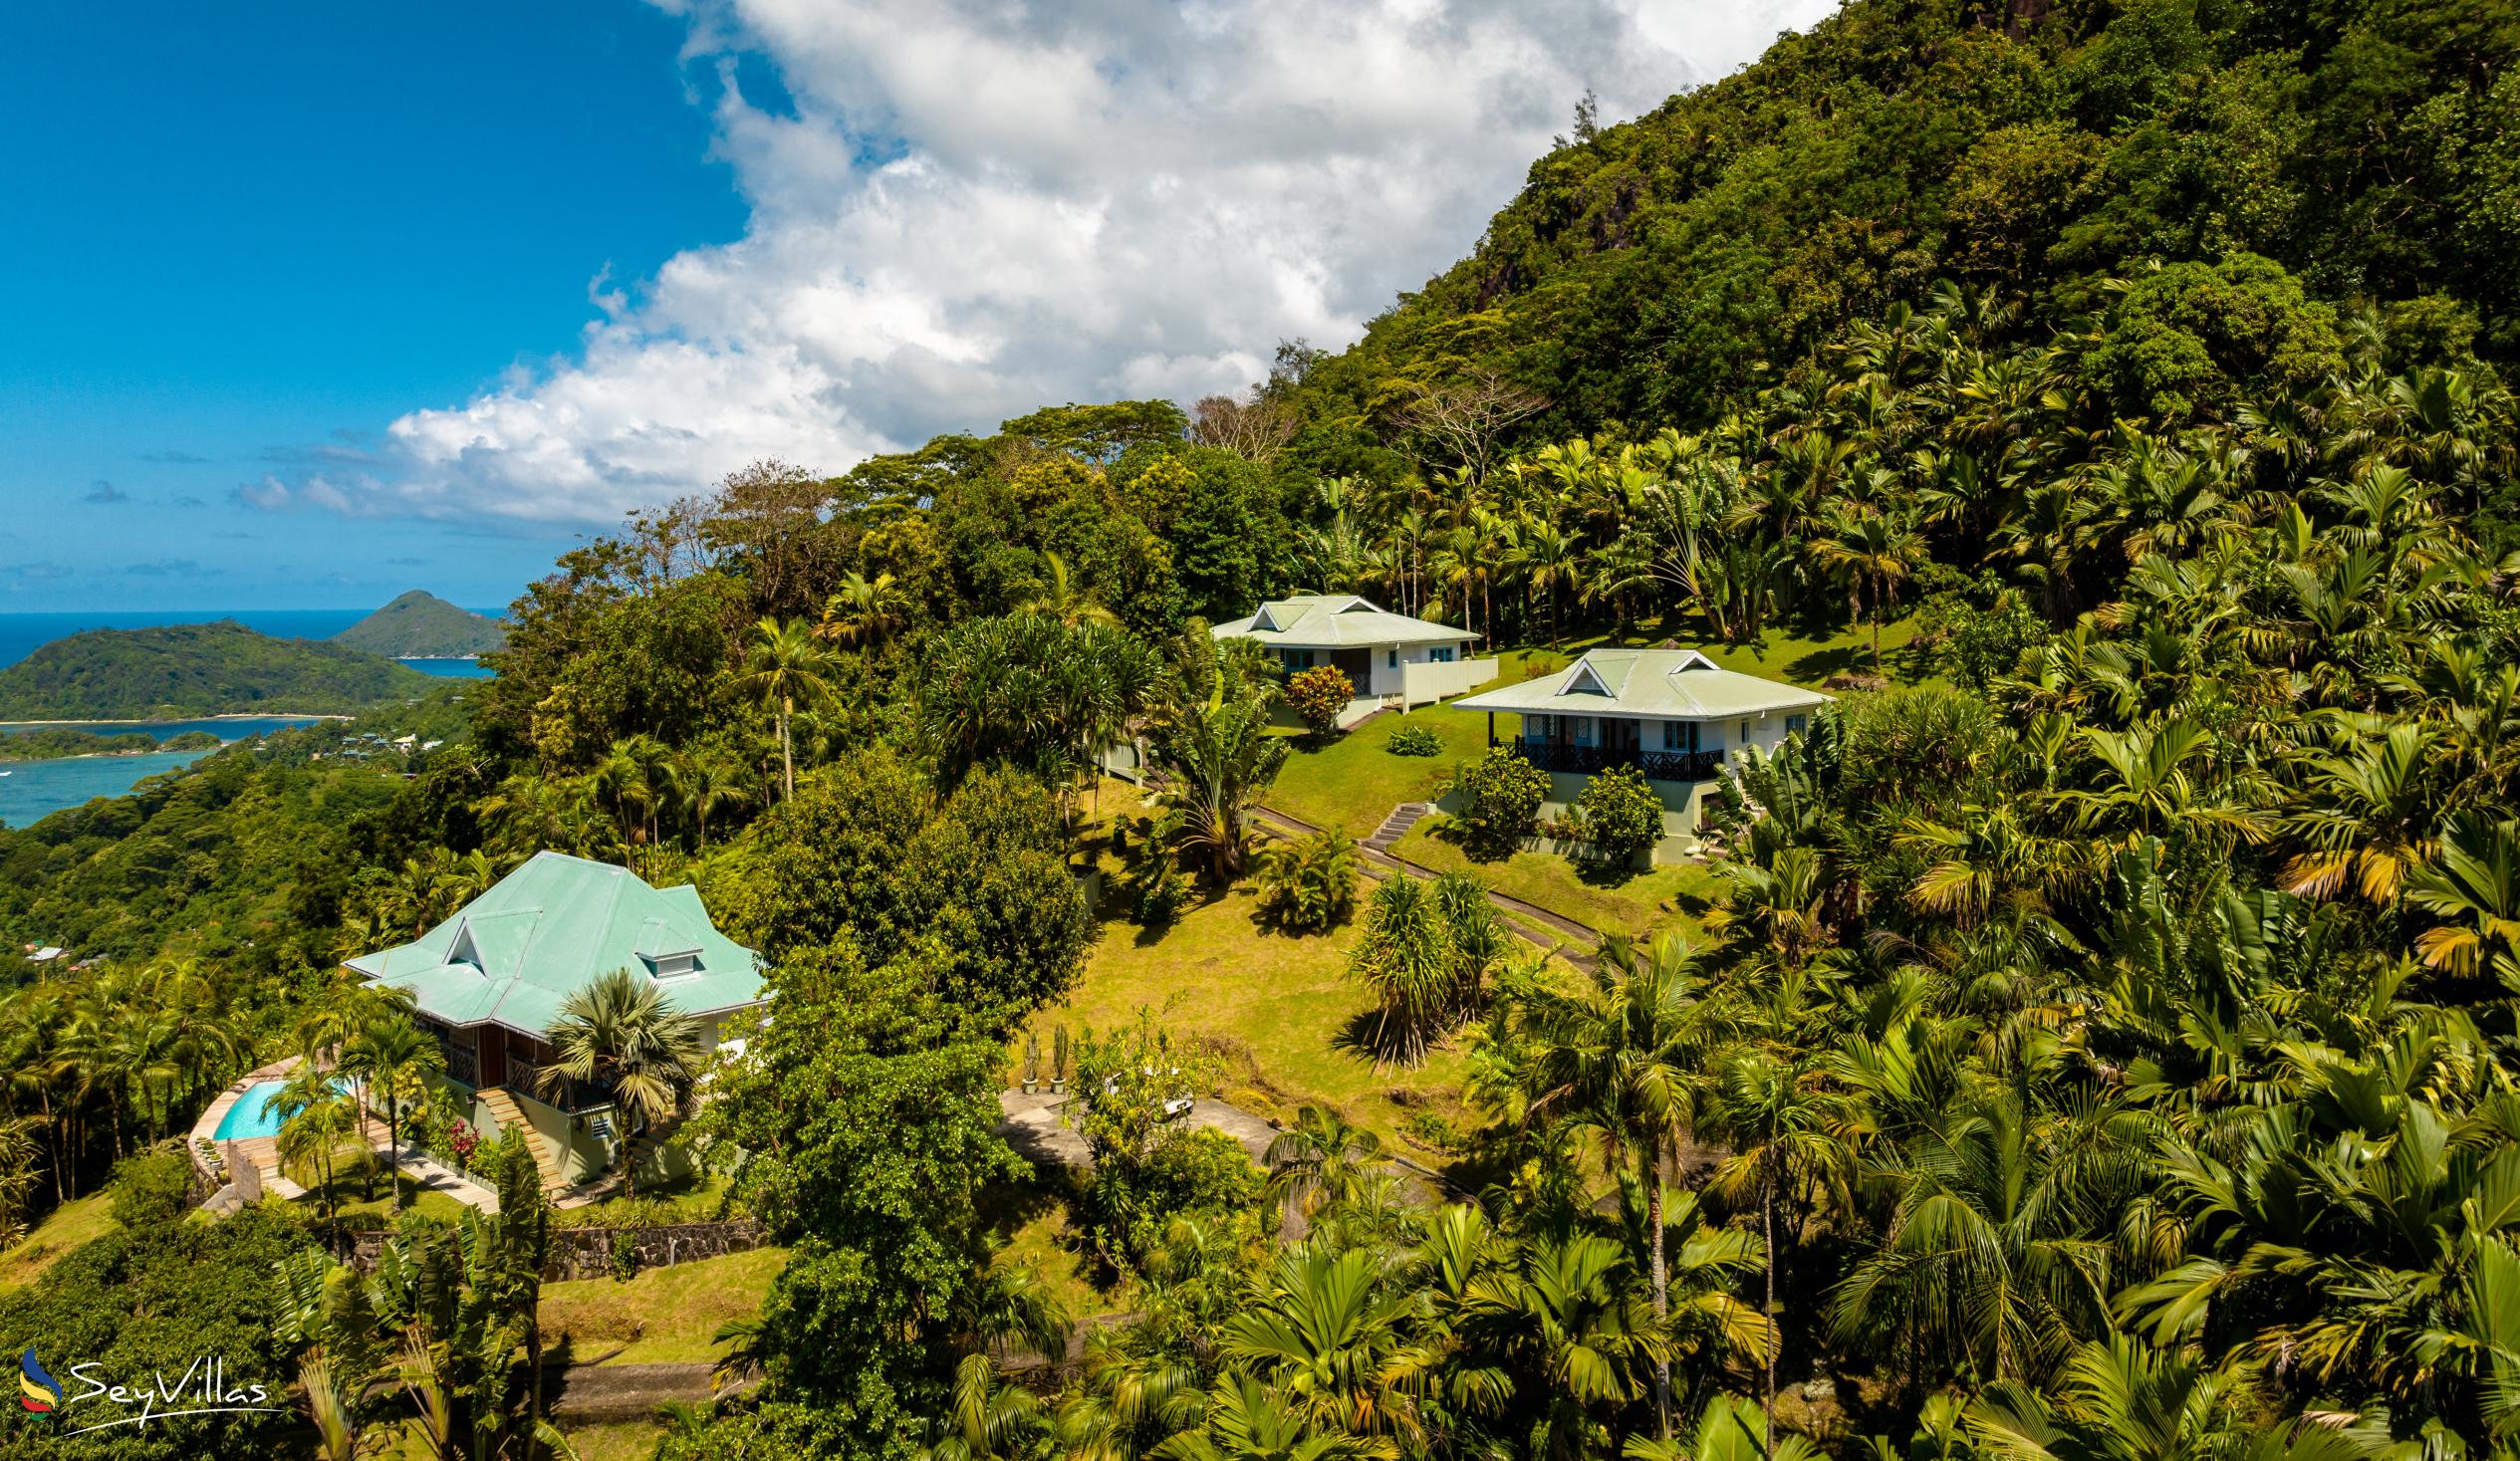 Photo 8: Amuse Bush - Outdoor area - Mahé (Seychelles)